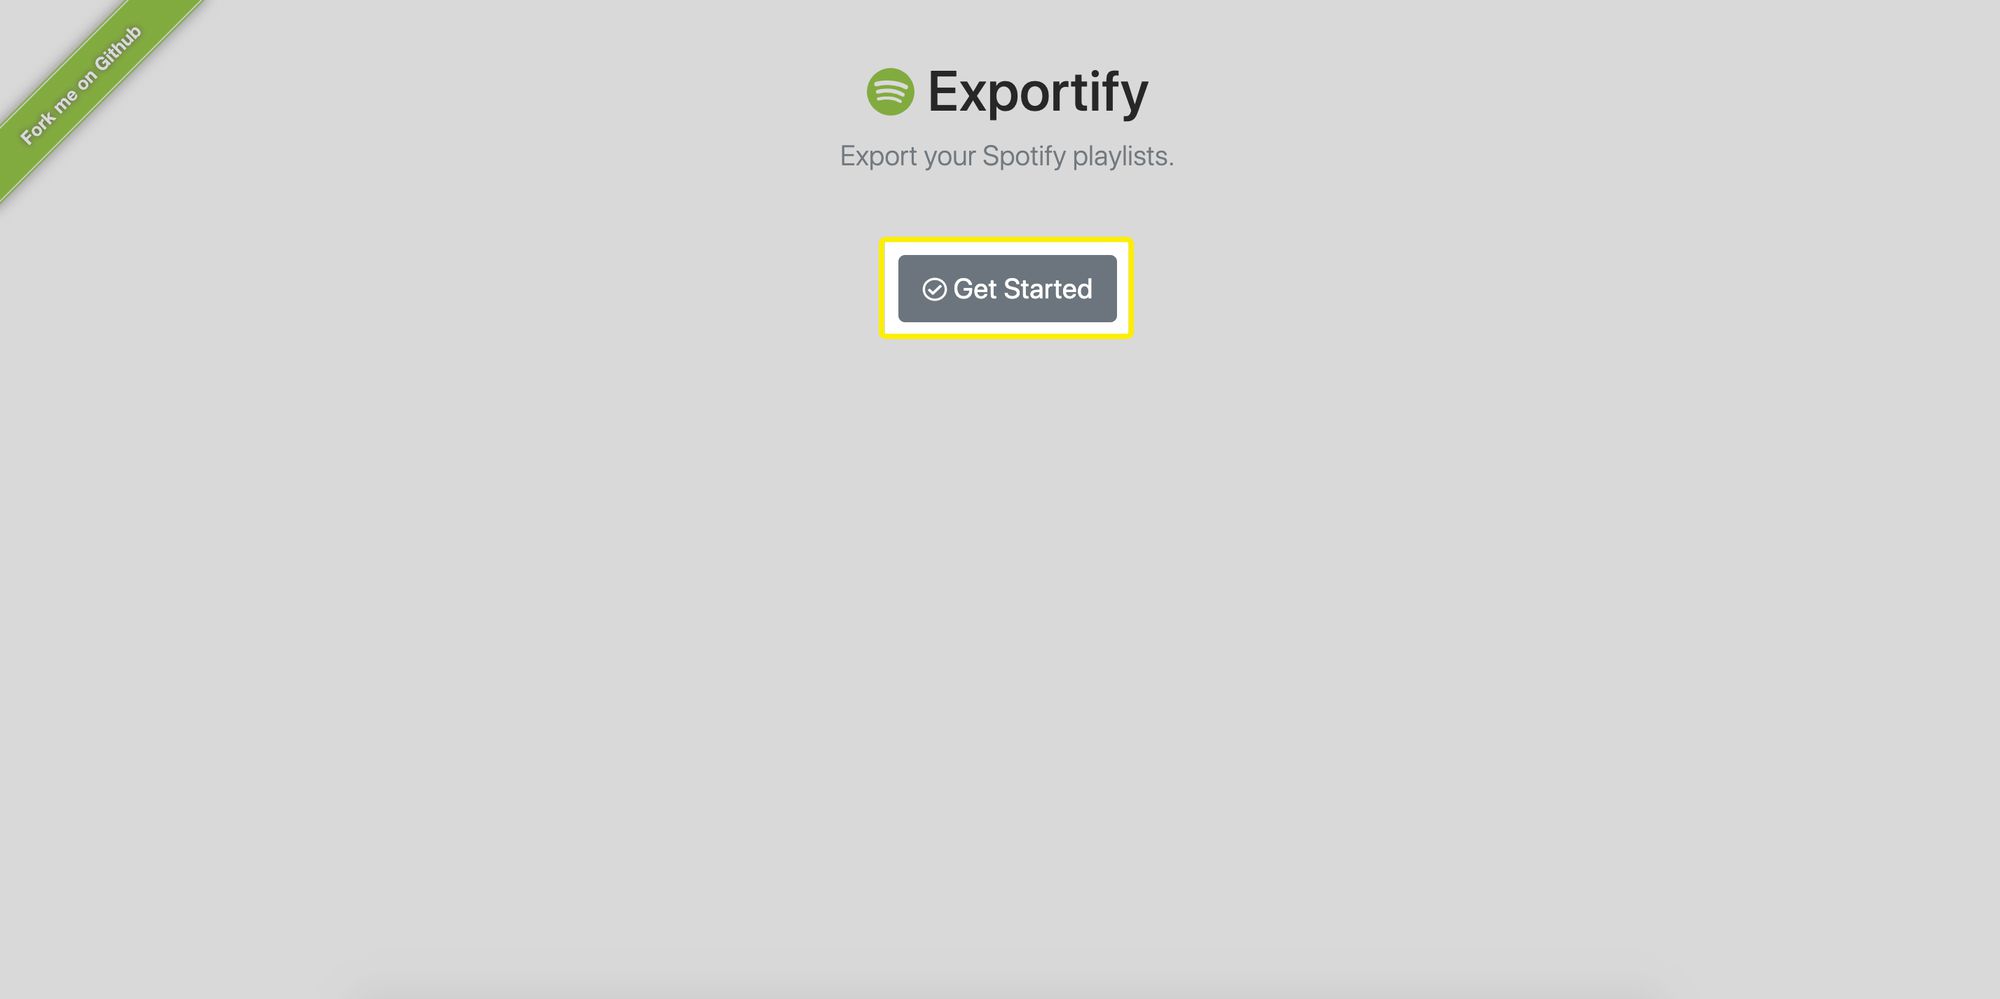 Spotify exportify Aan de slag